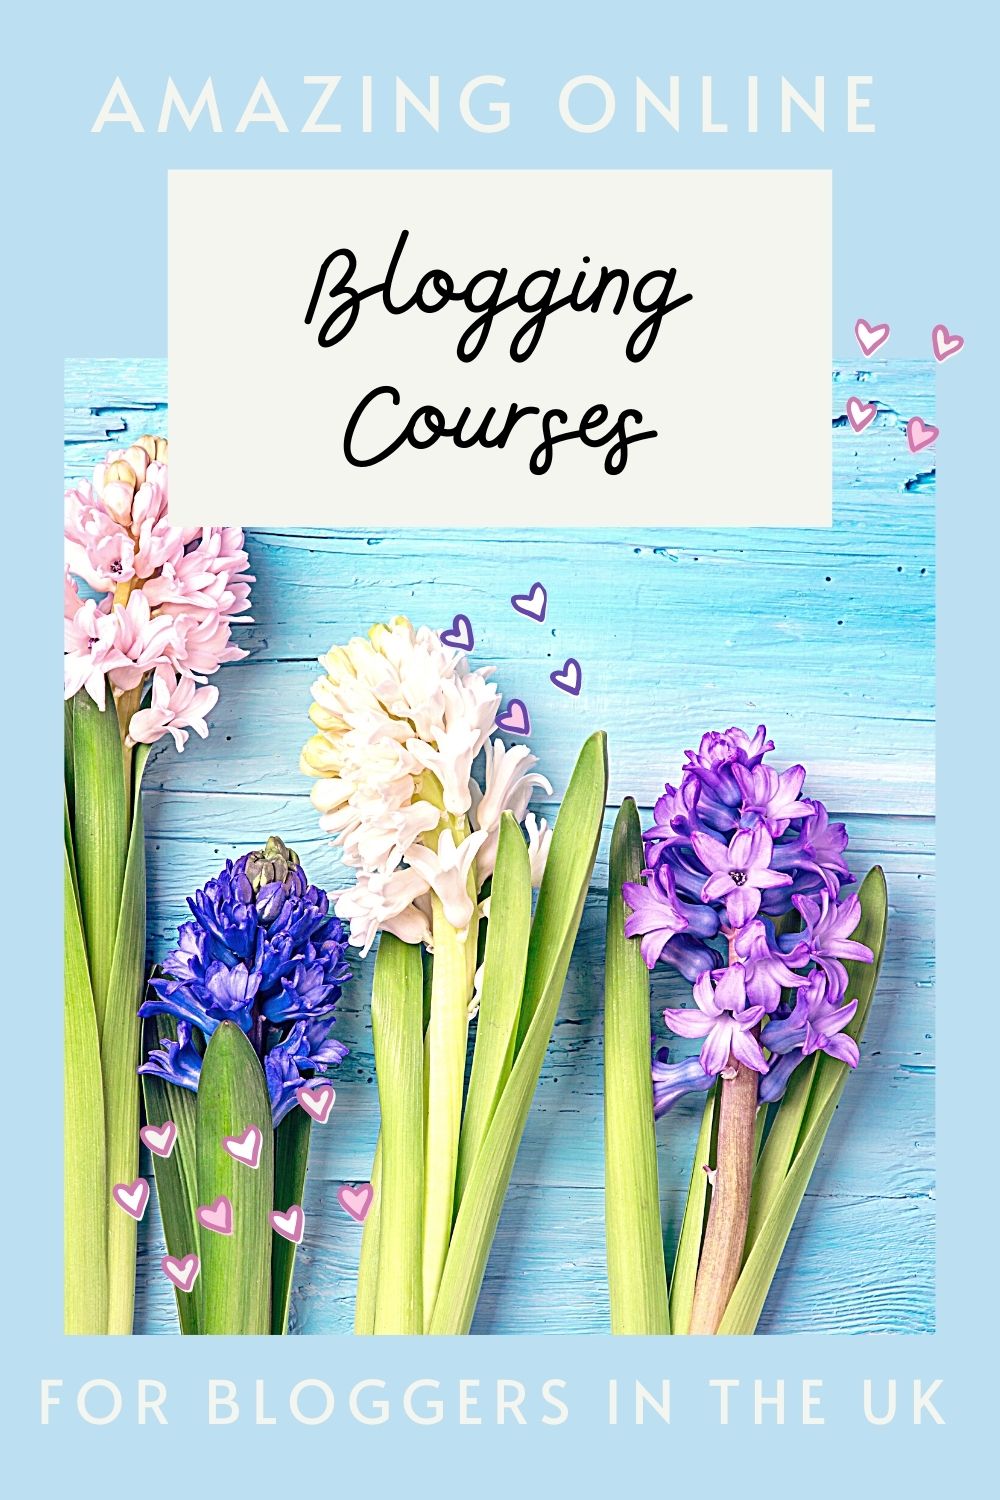 <img src="amazing.jpg" alt="amazing online blogging courses"/> 